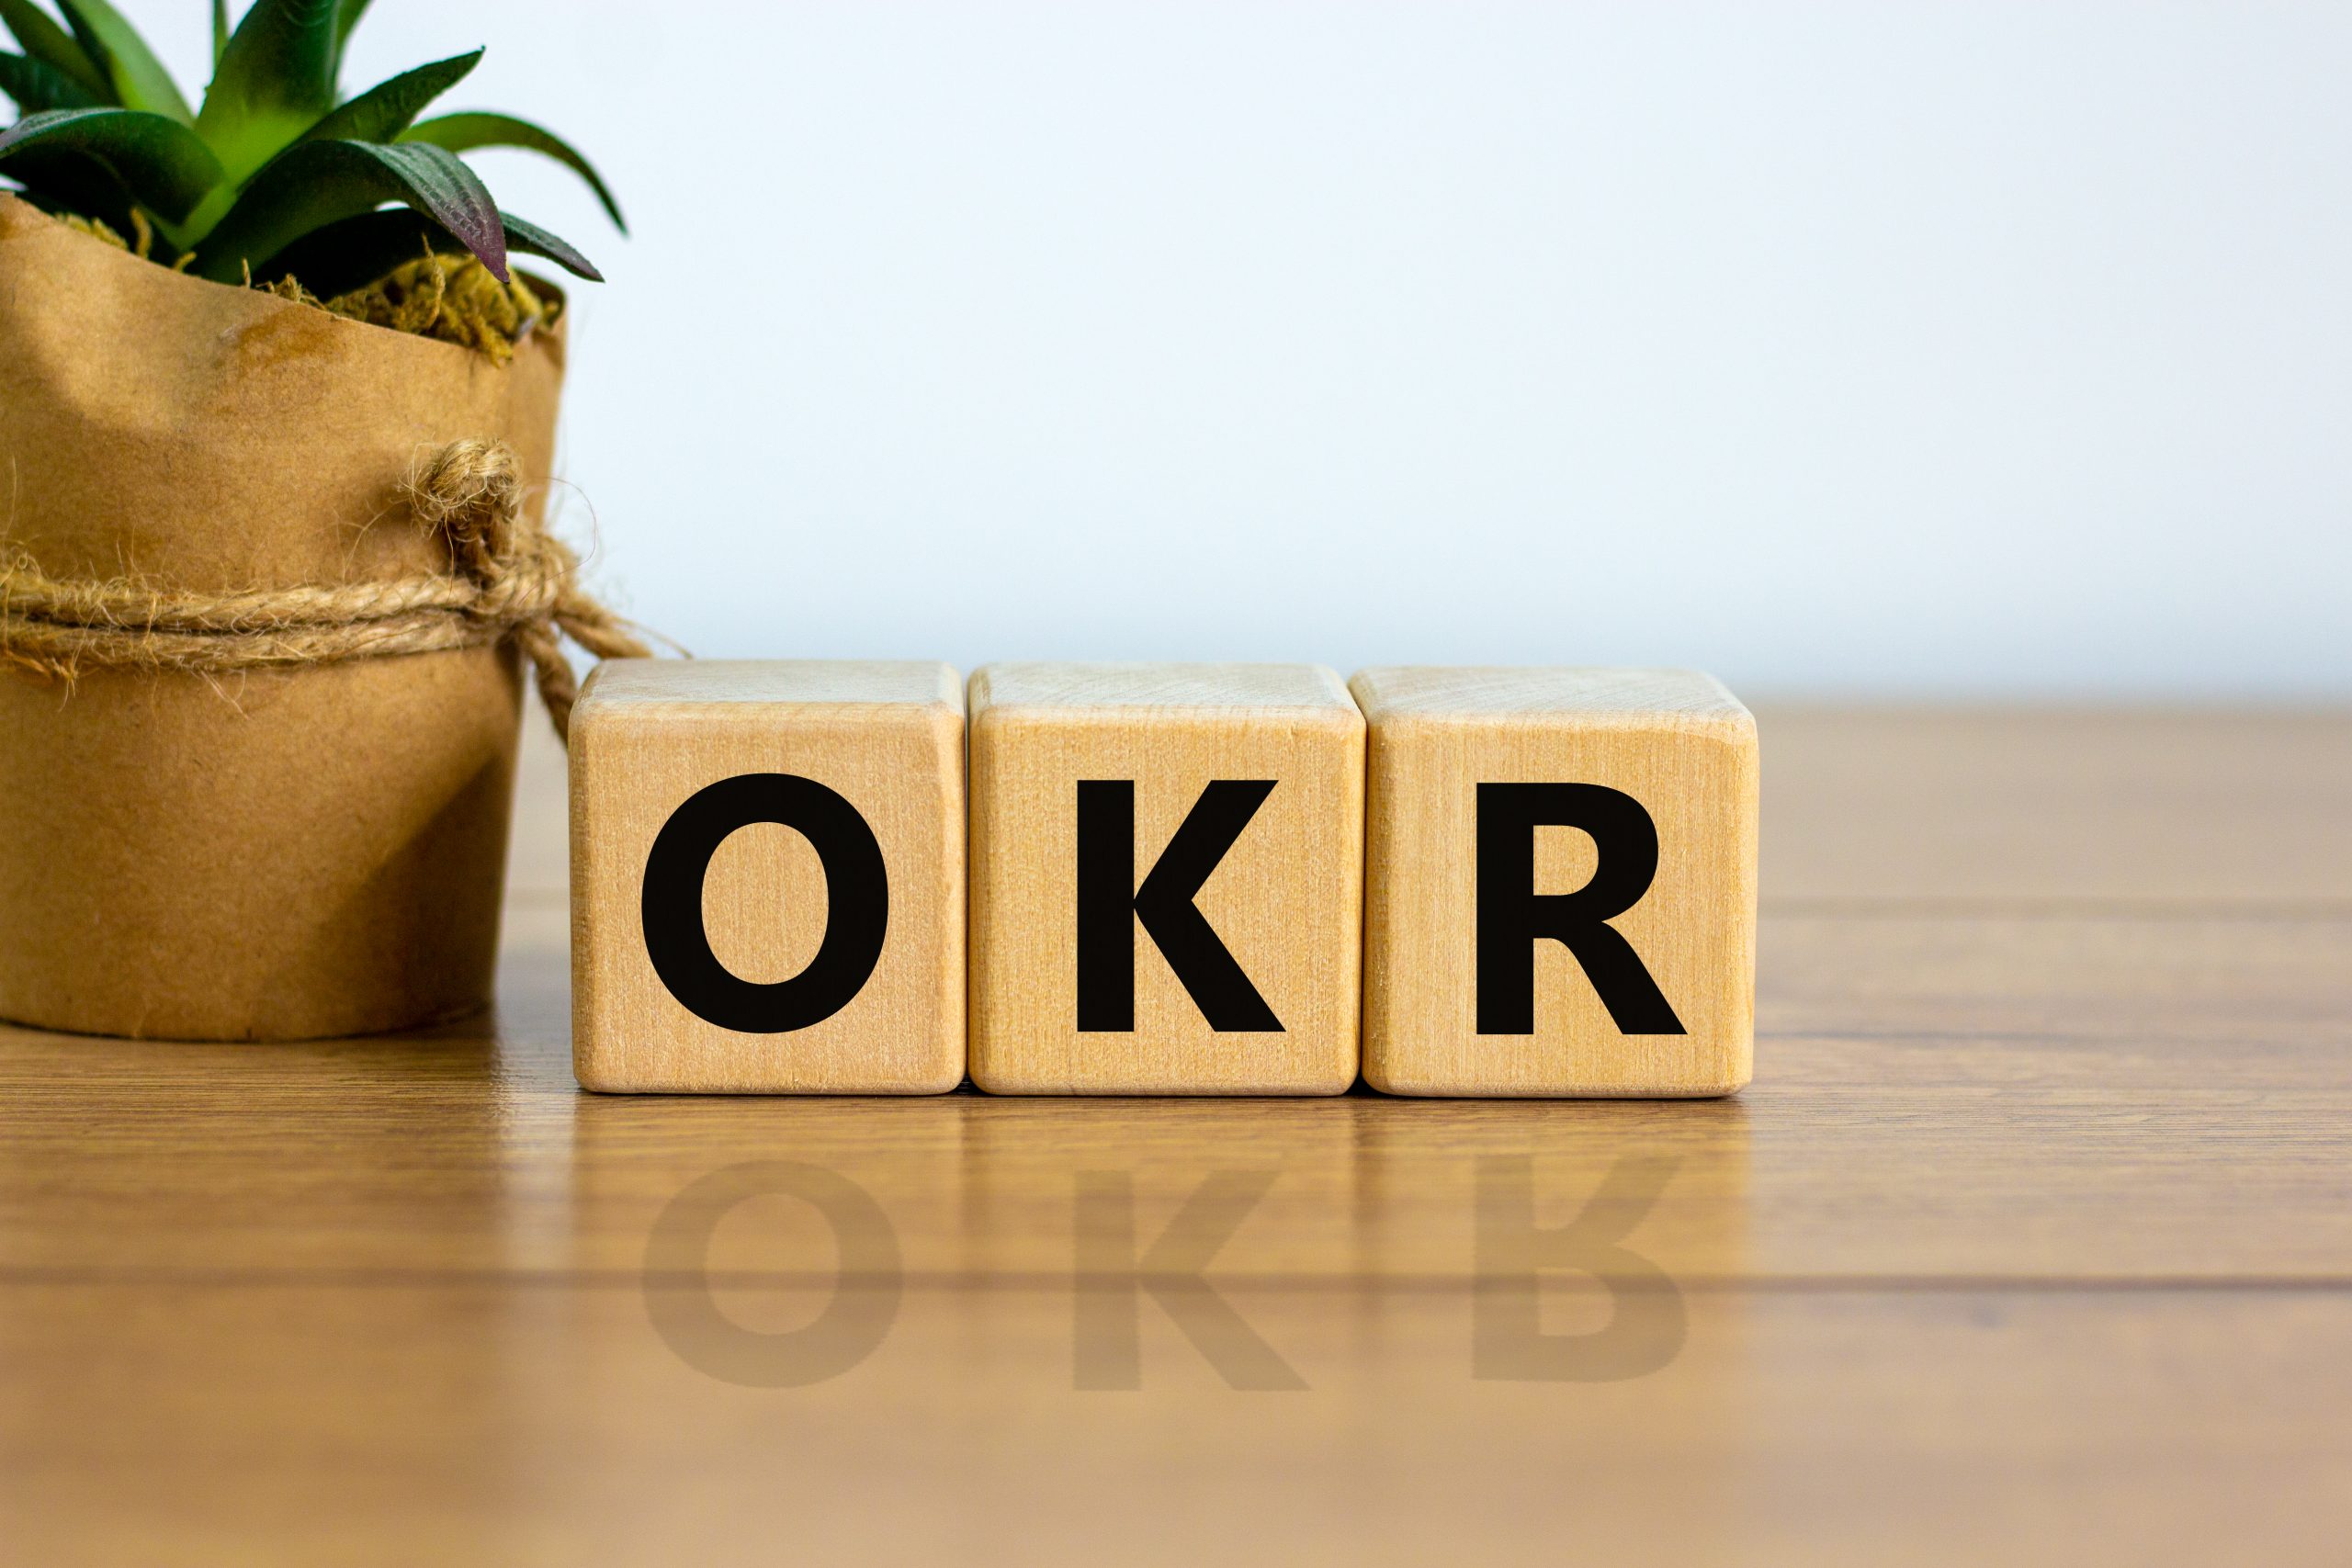 OKRS are OK